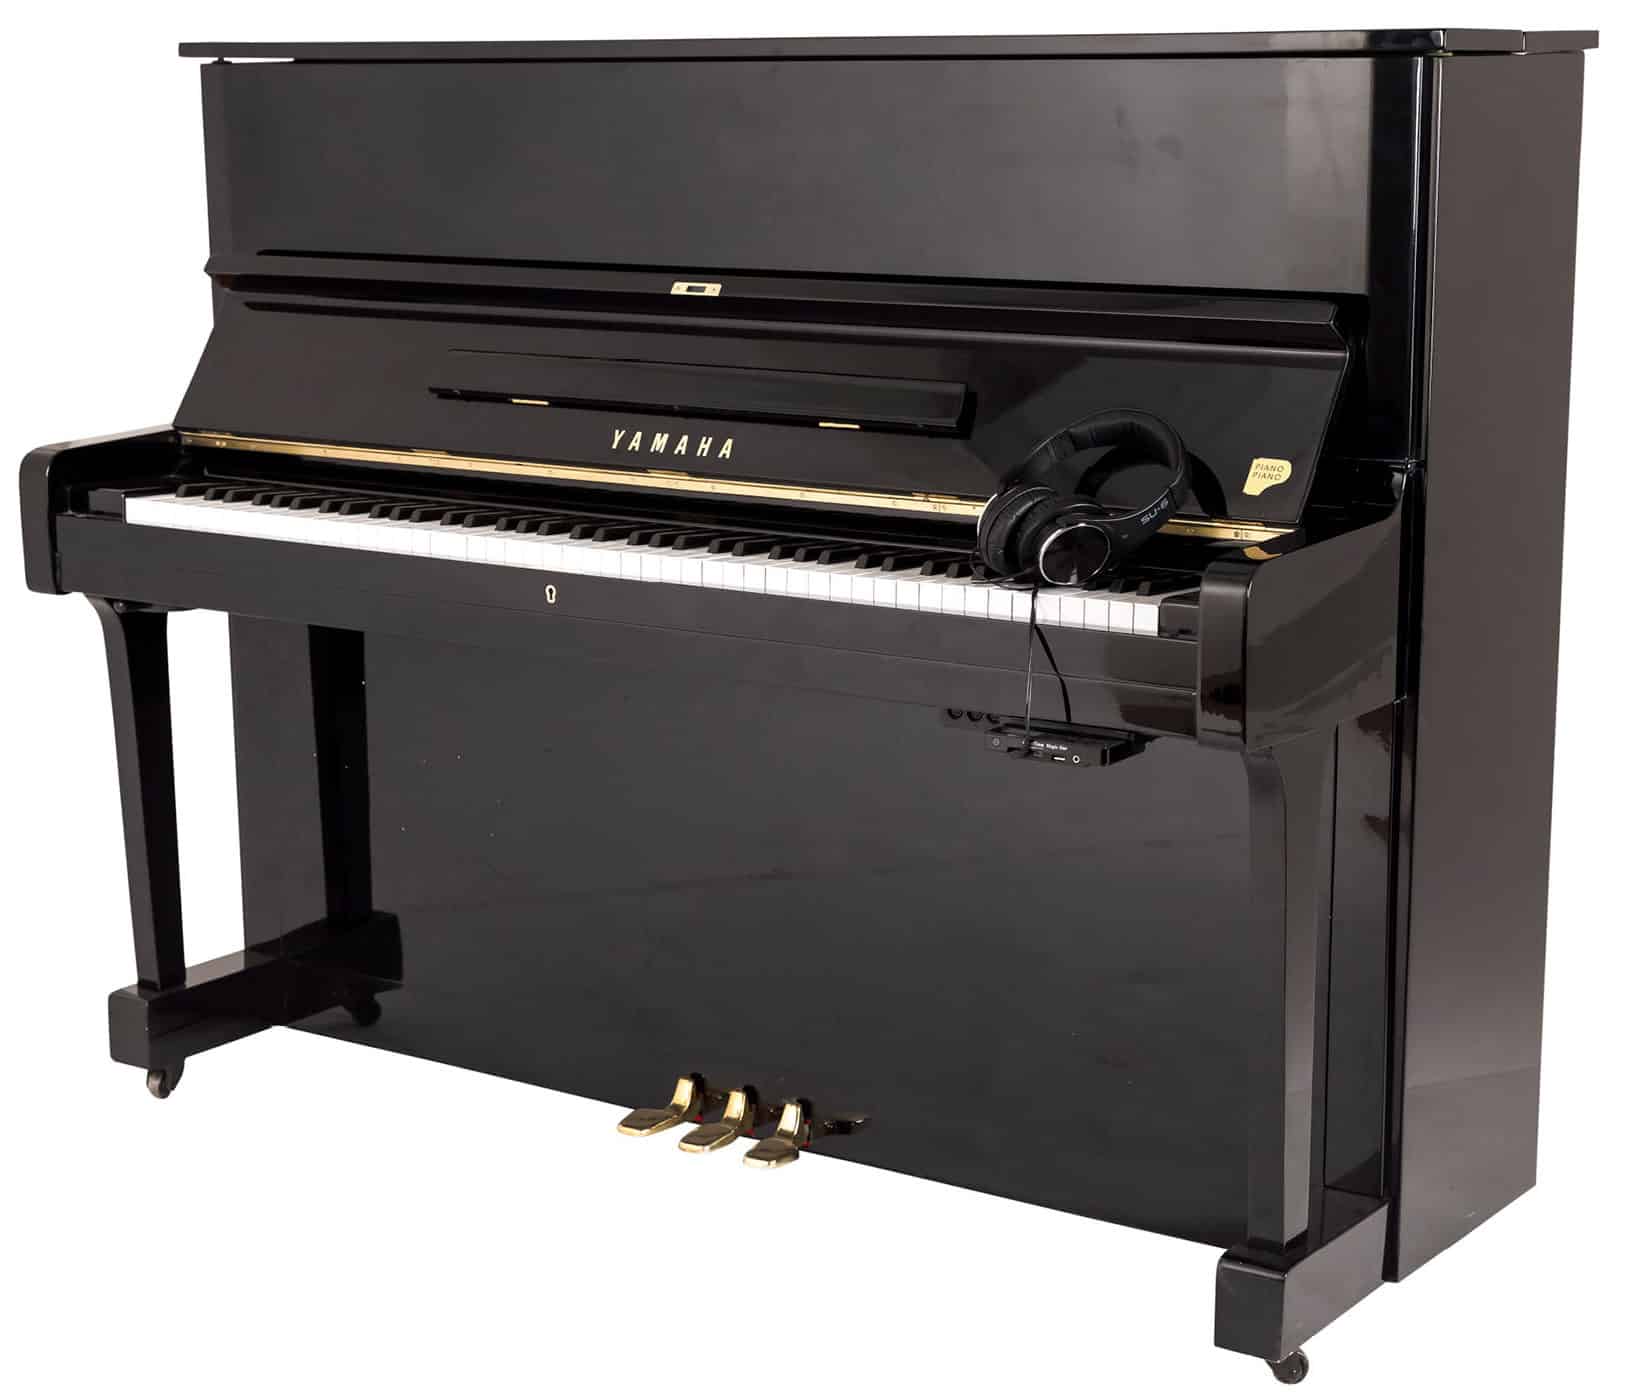 Audaz Telemacos Gorrión Yamaha U148" SILENT Professional Upright Piano | PianoPiano - Piano Rentals  & More